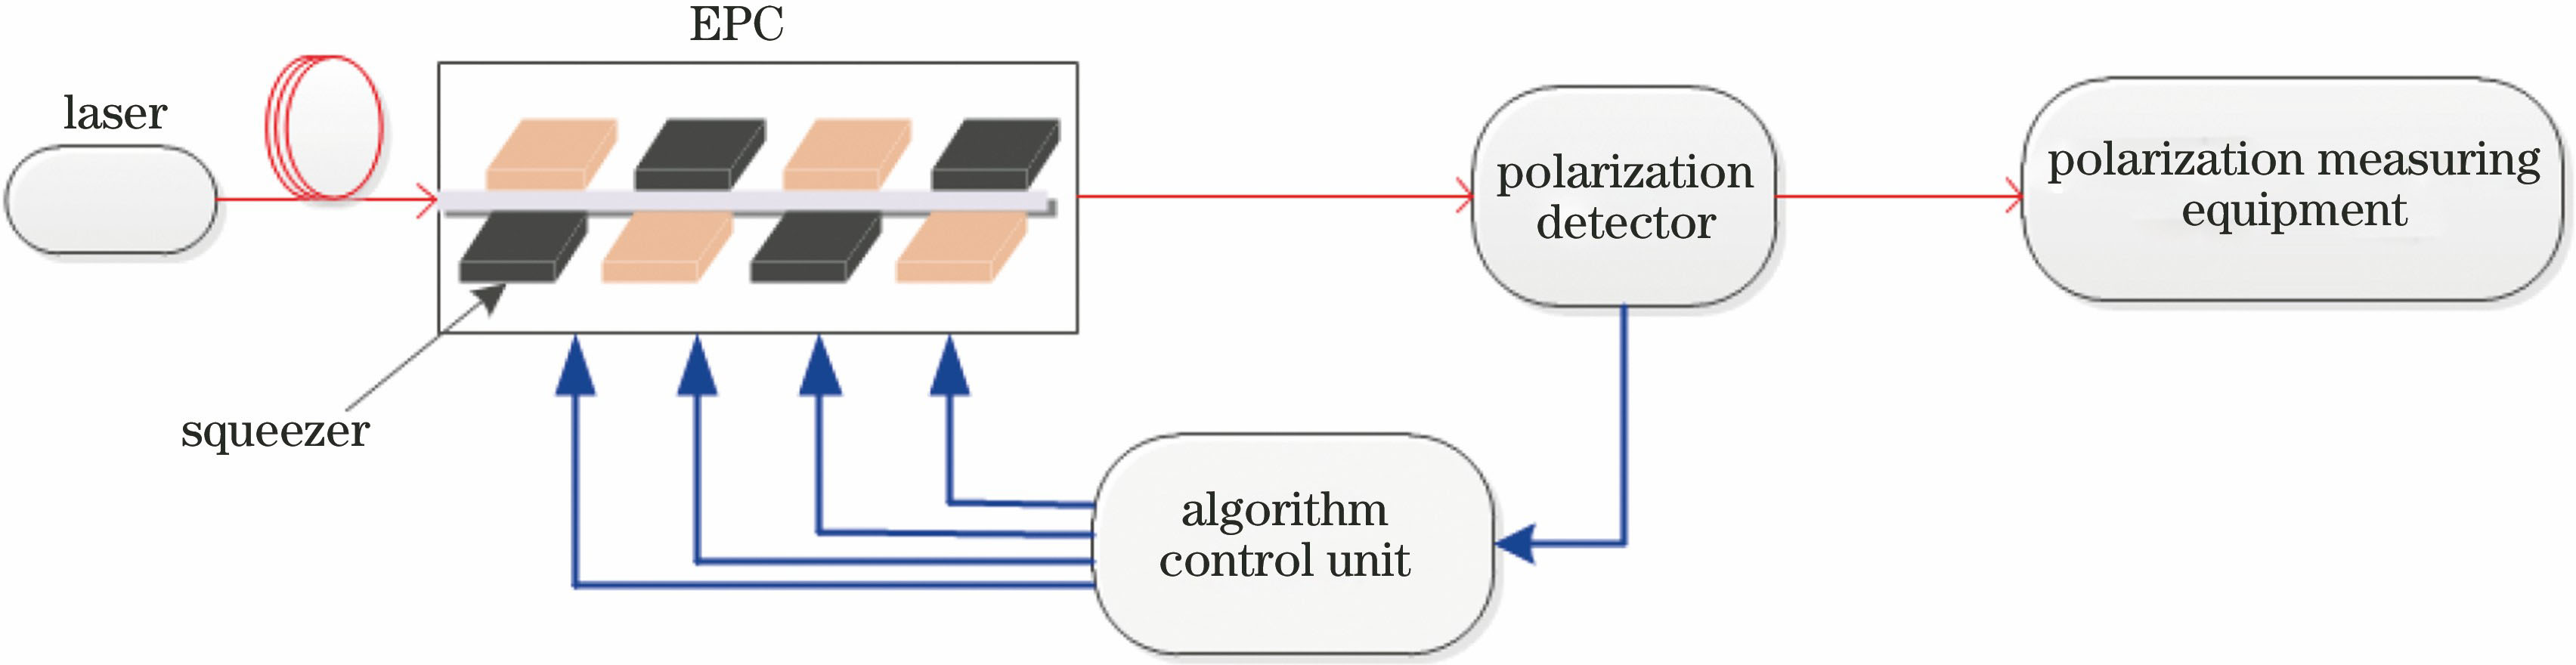 Polarization control system based on Adam algorithm